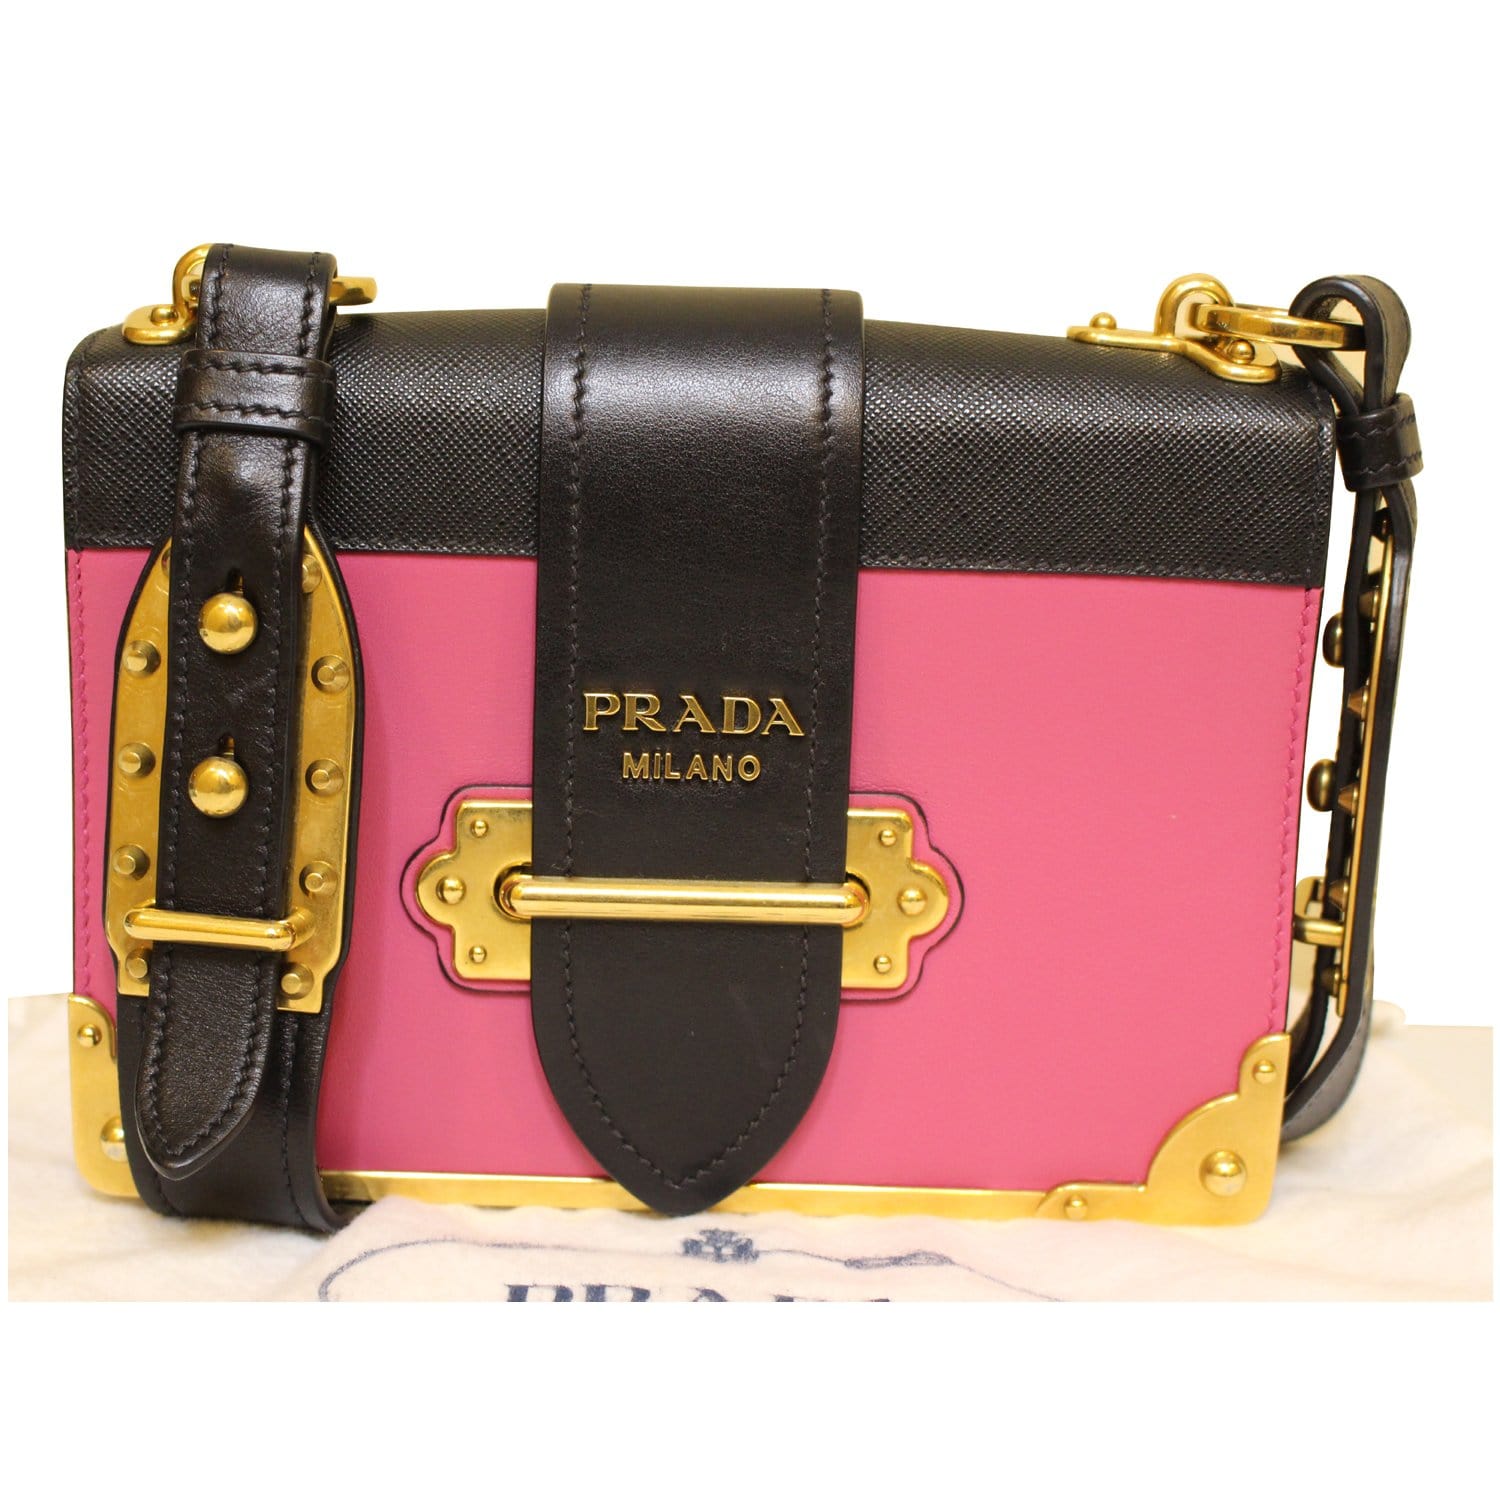 prada pink bag gold chain